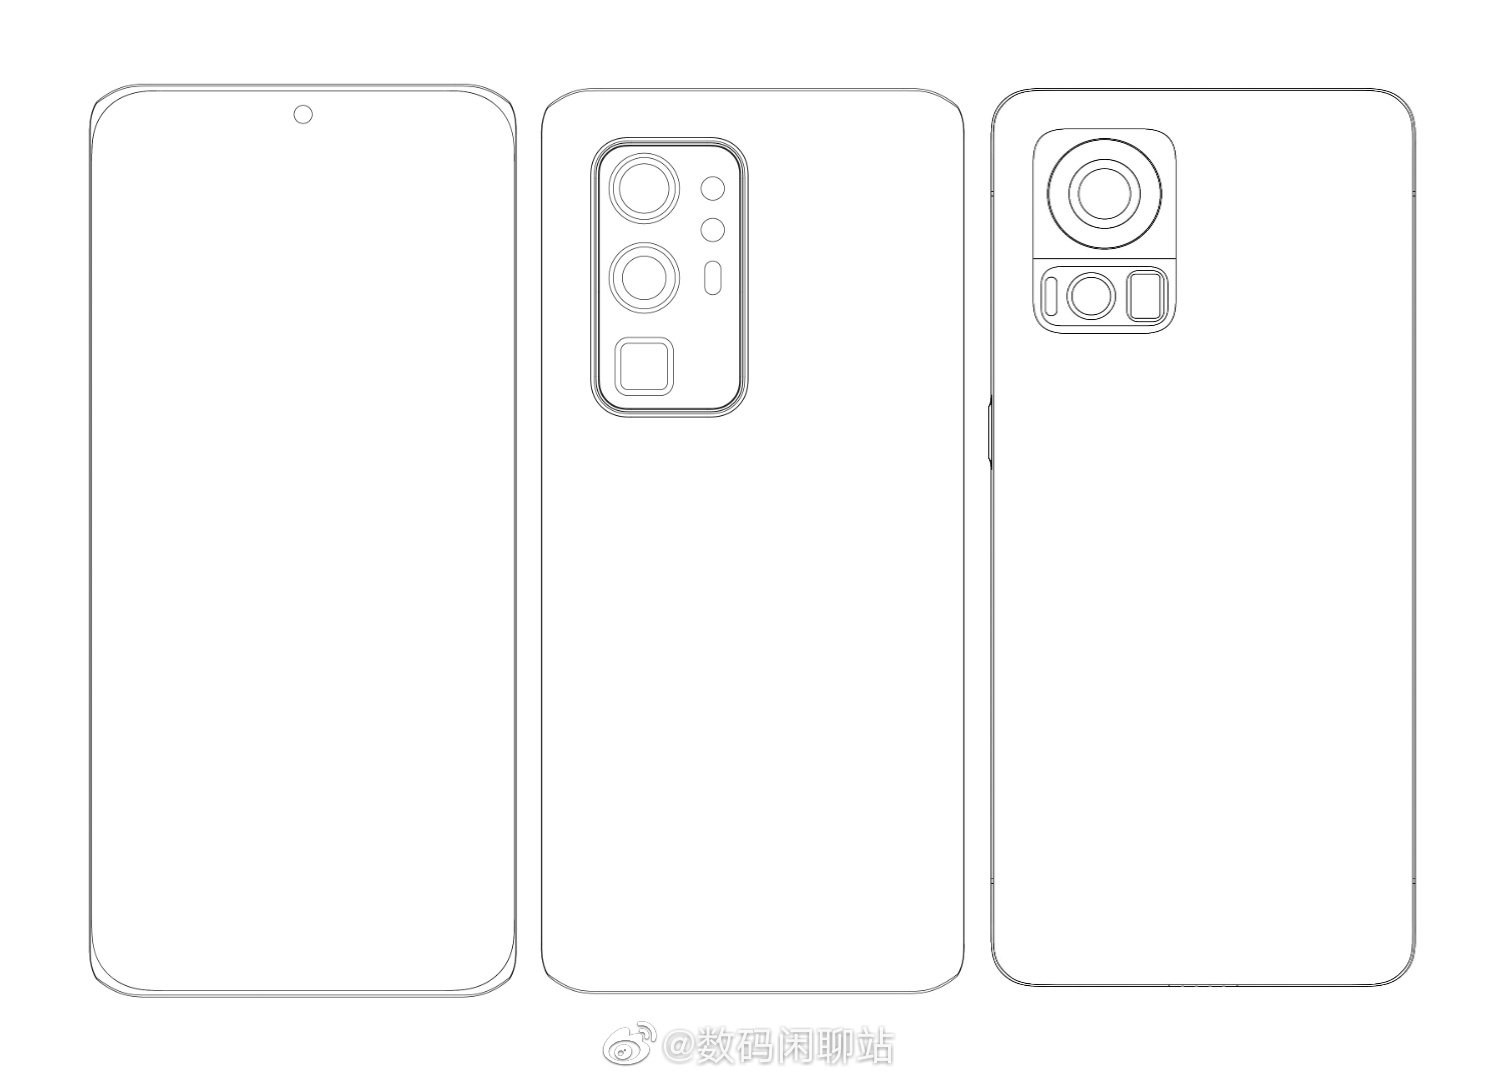 Xiaomi Mi 11 Series Development Stage Canceled Design